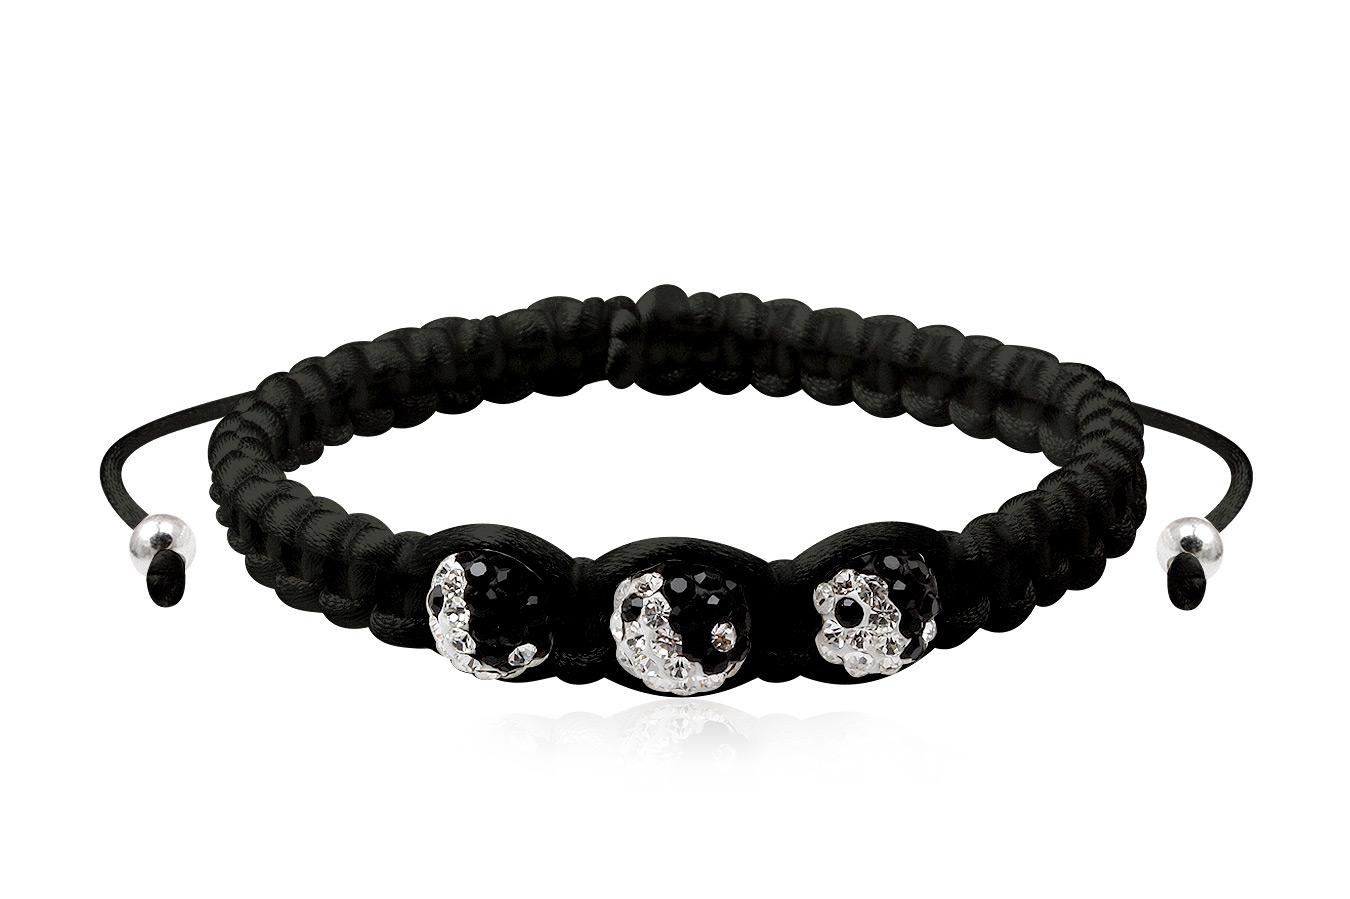 bracelet-yin-yang-soie-macramé-shamballa-homme-cristal-préciosa-argent-noir-PHW0957